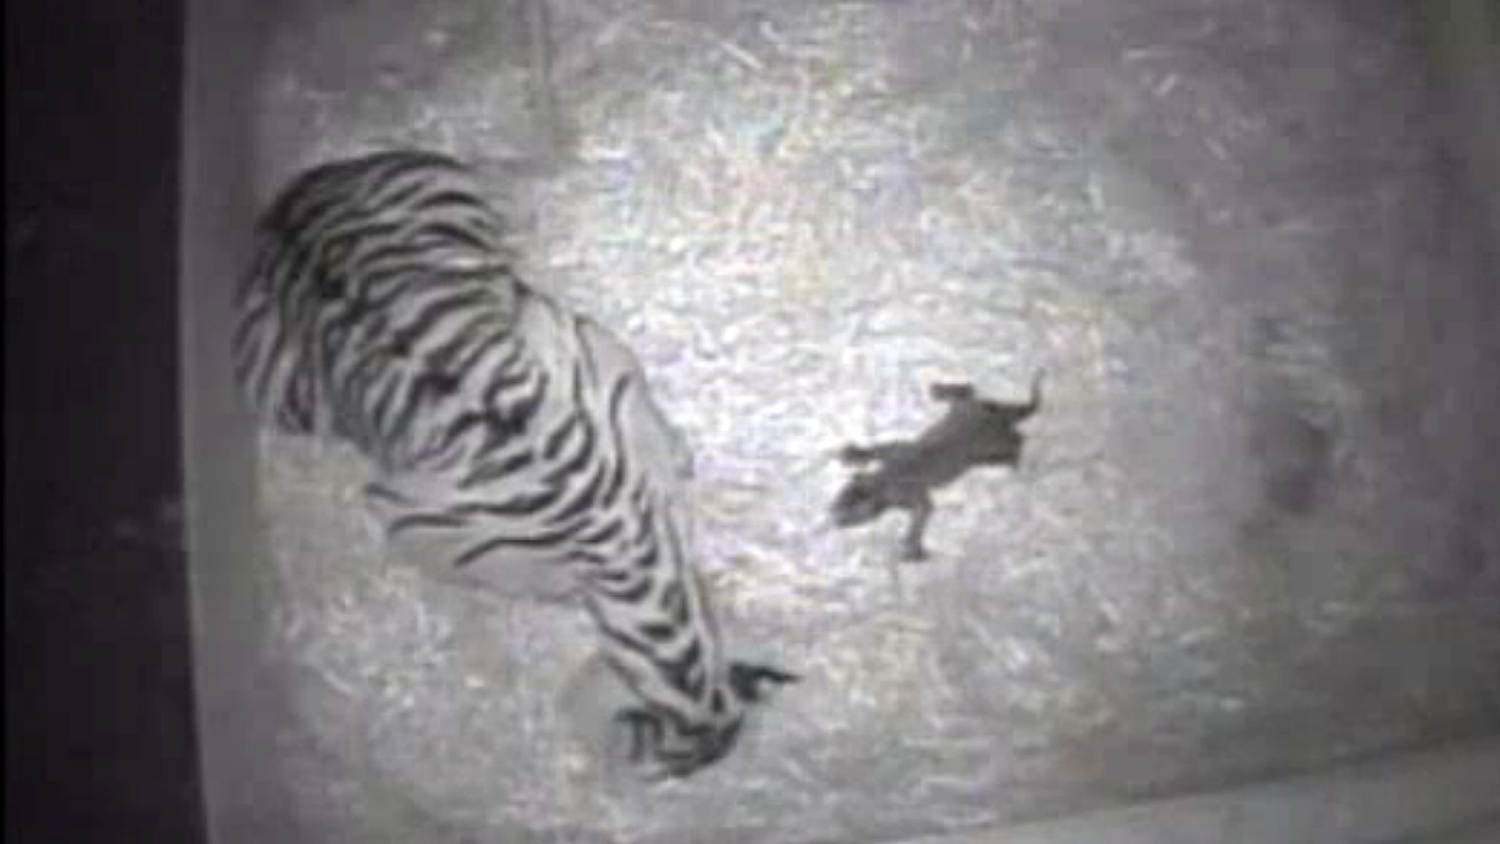 Cherished Tiger Cub In Black & White